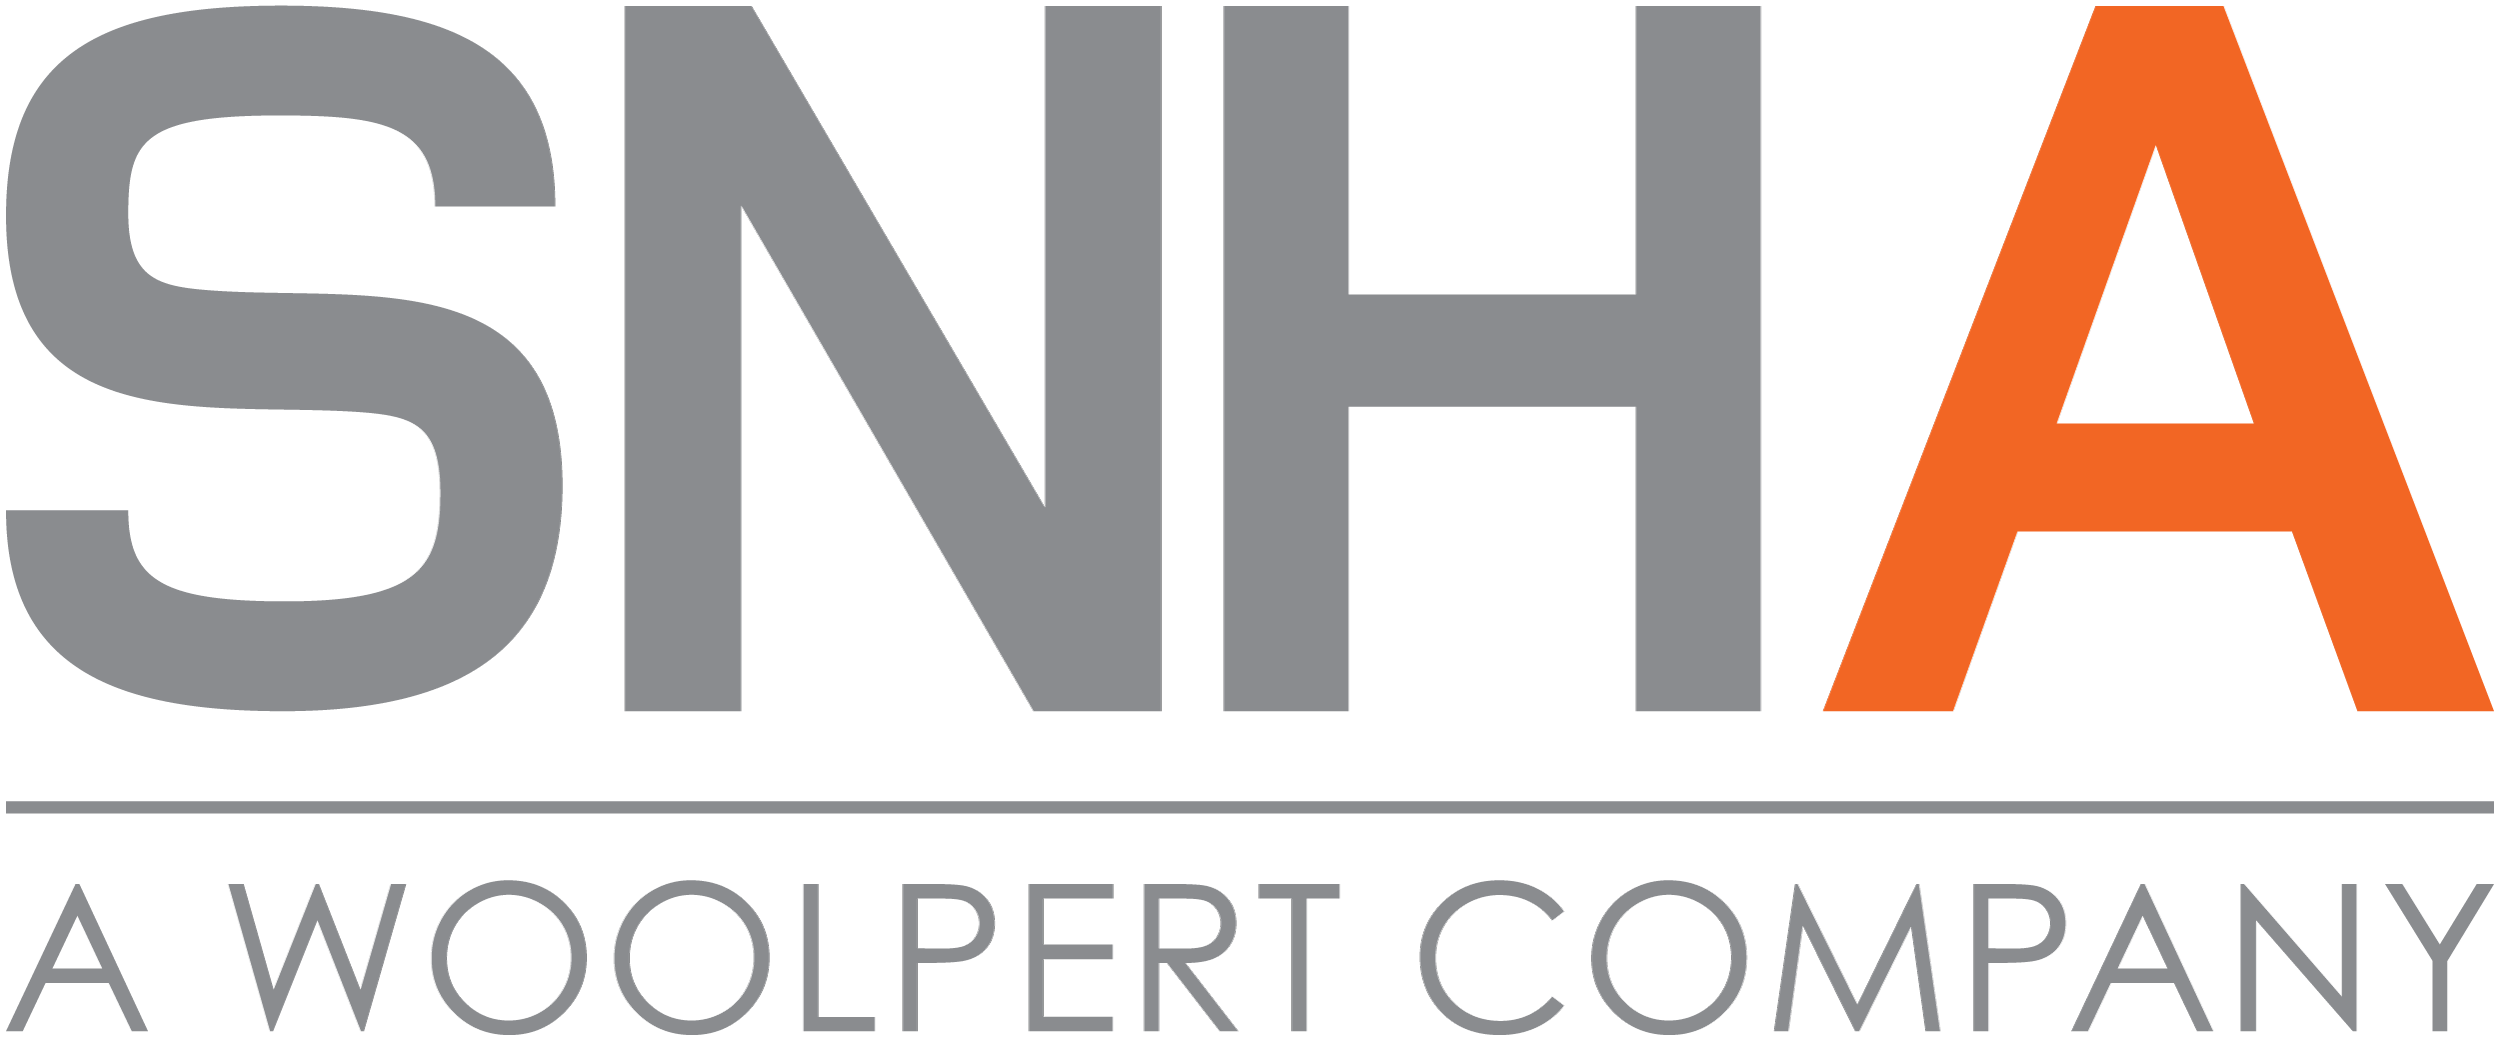 SNHA: A Woolpert Company